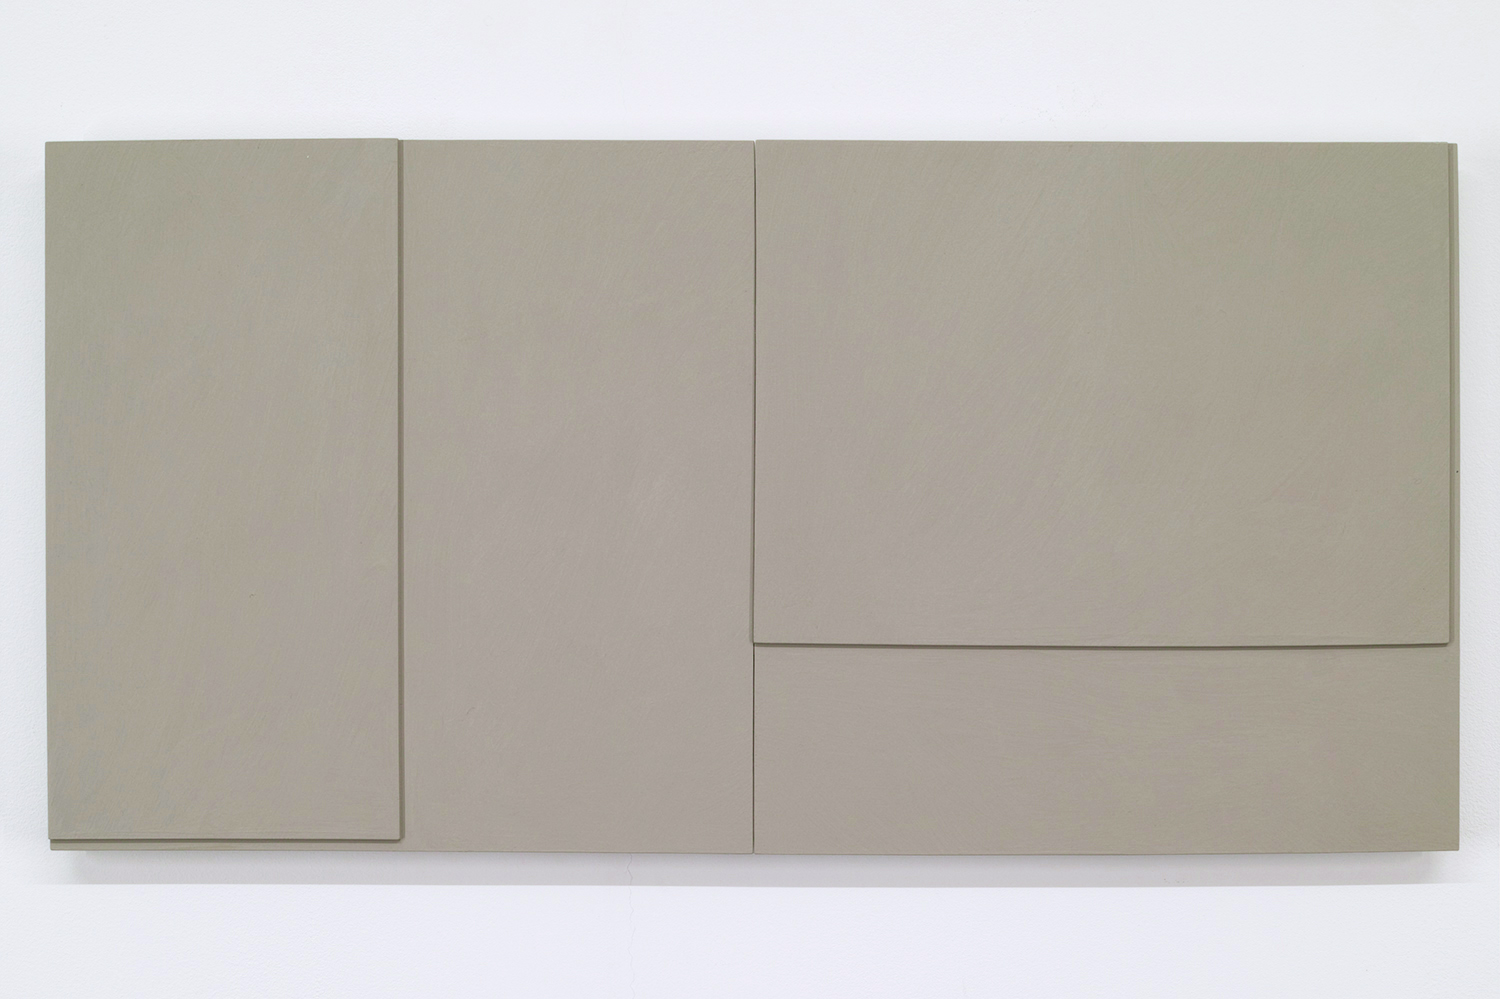 TS1702<br>Colour Gesso on Panel, 30 x 30 cm each (set of 2), 2017